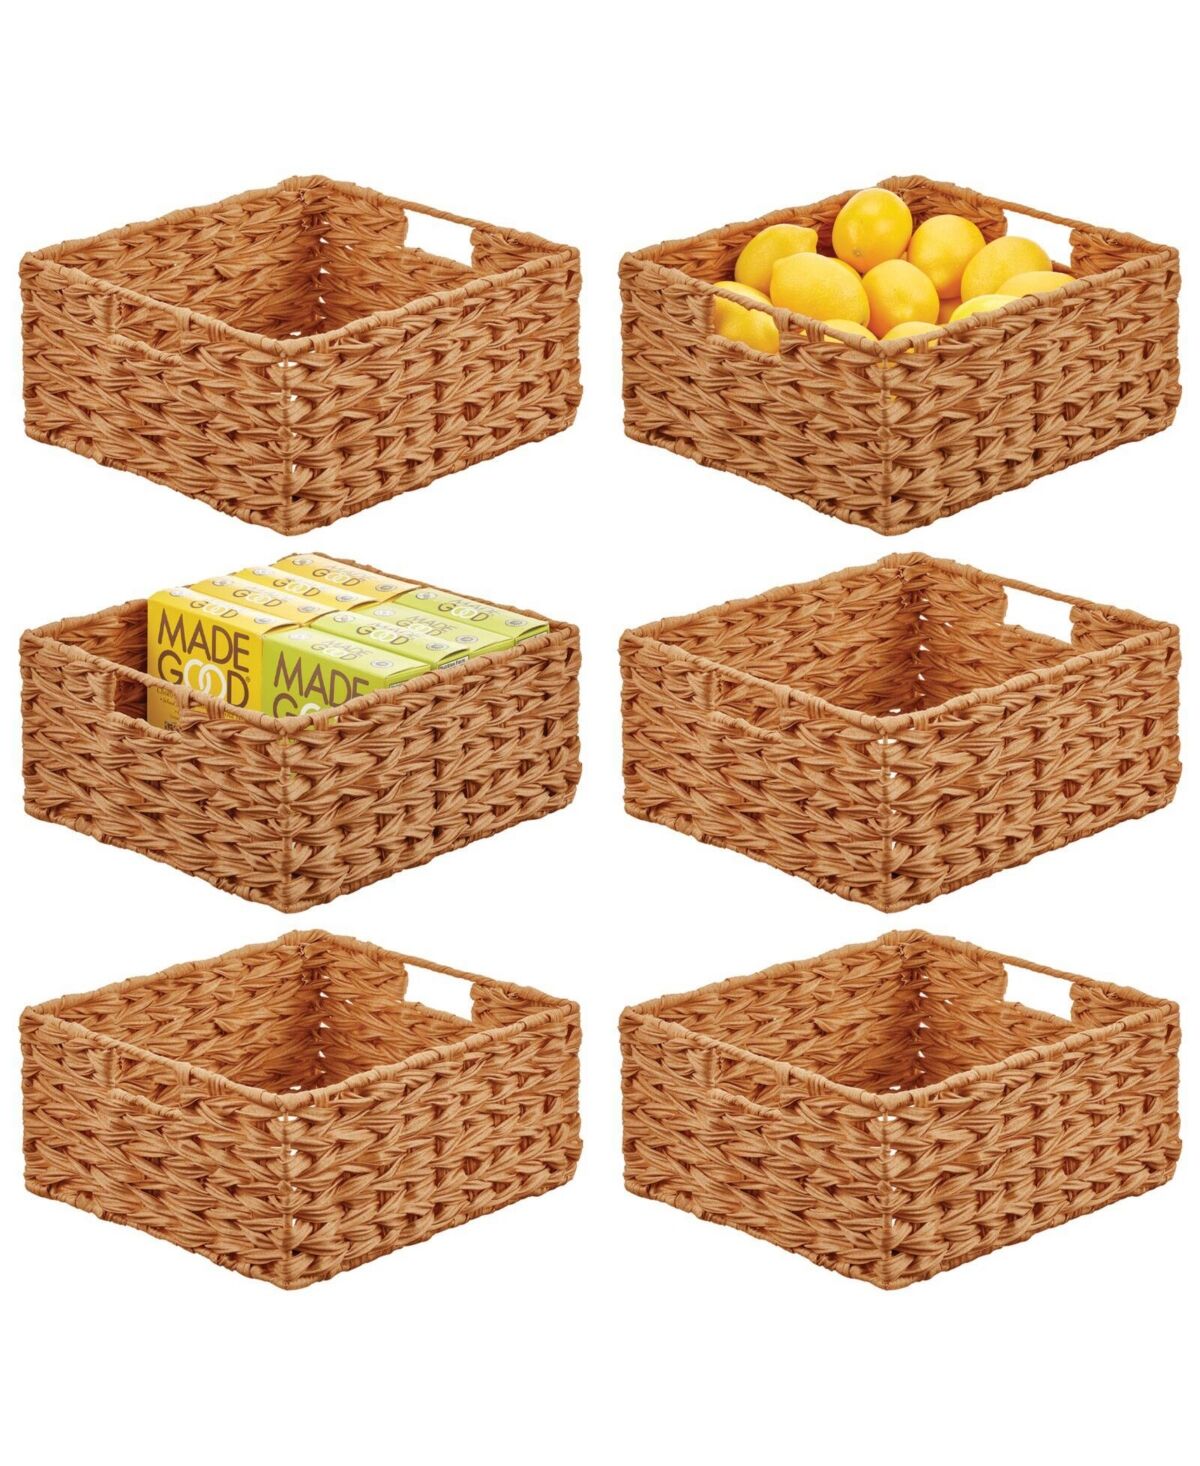 mDesign Woven Farmhouse Kitchen Pantry Food Storage Basket Box, Medium - 6 Pack, Camel Brown - Camel